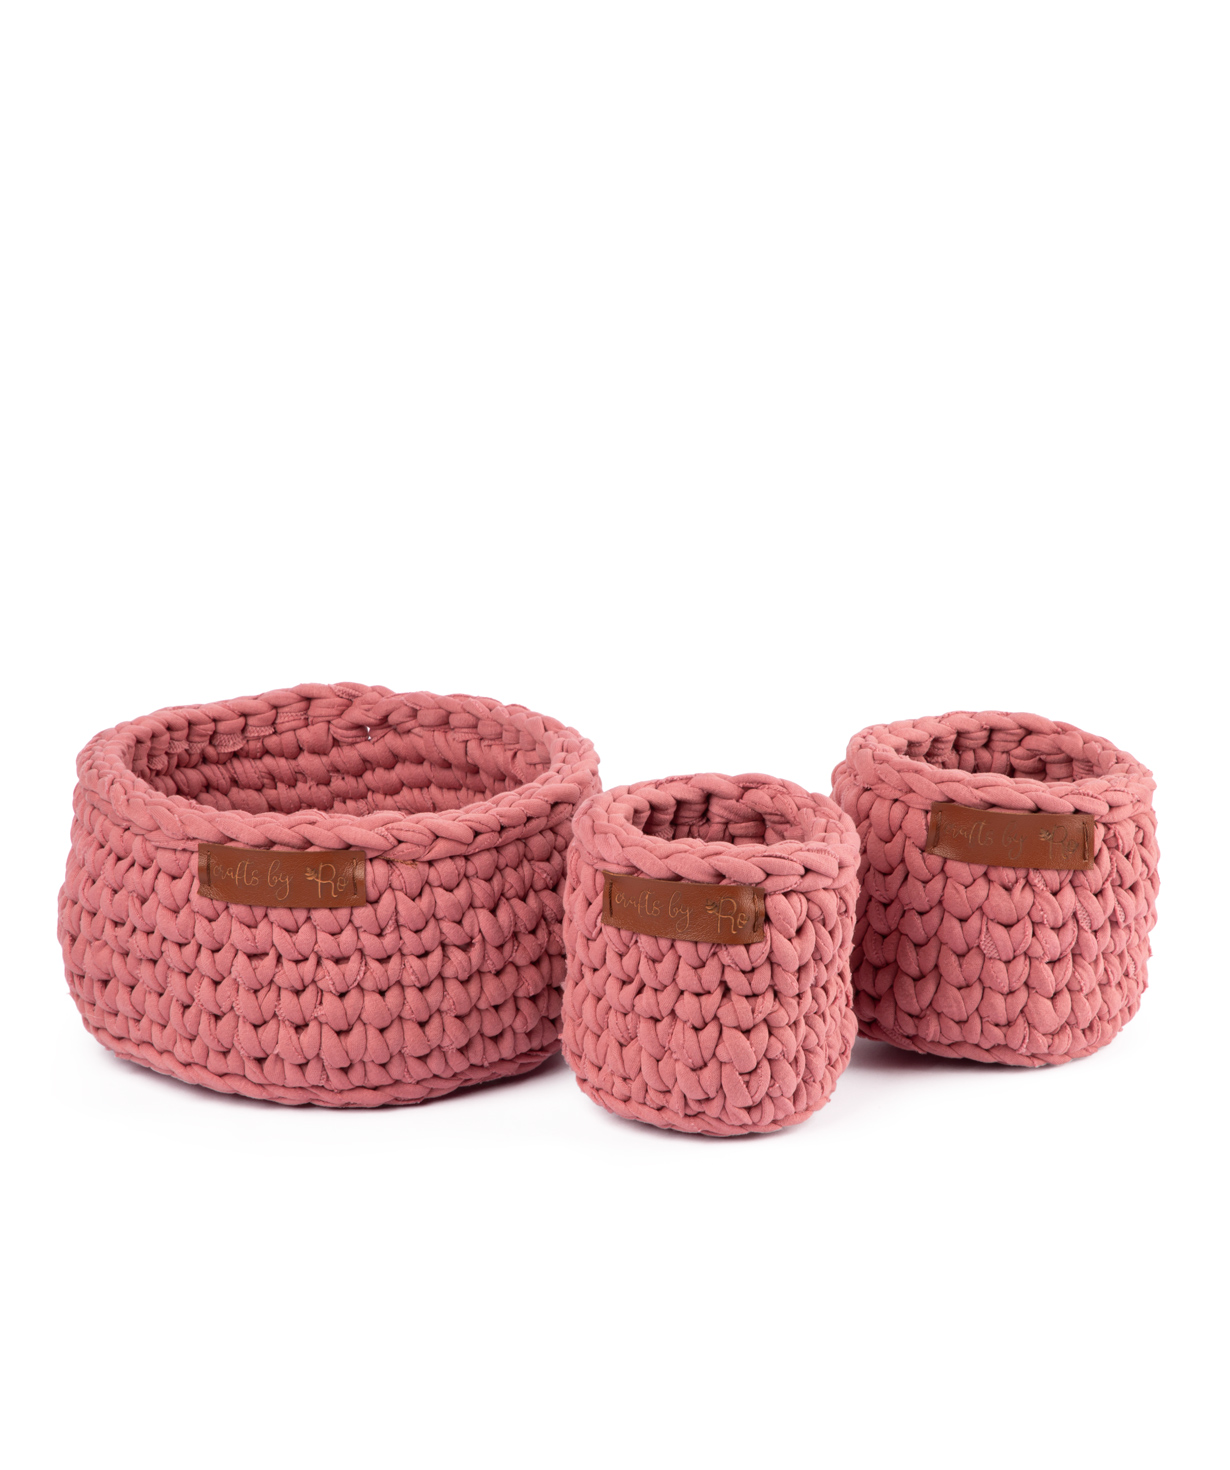 Collection `Ro Handmade` of handmade cotton baskets №1